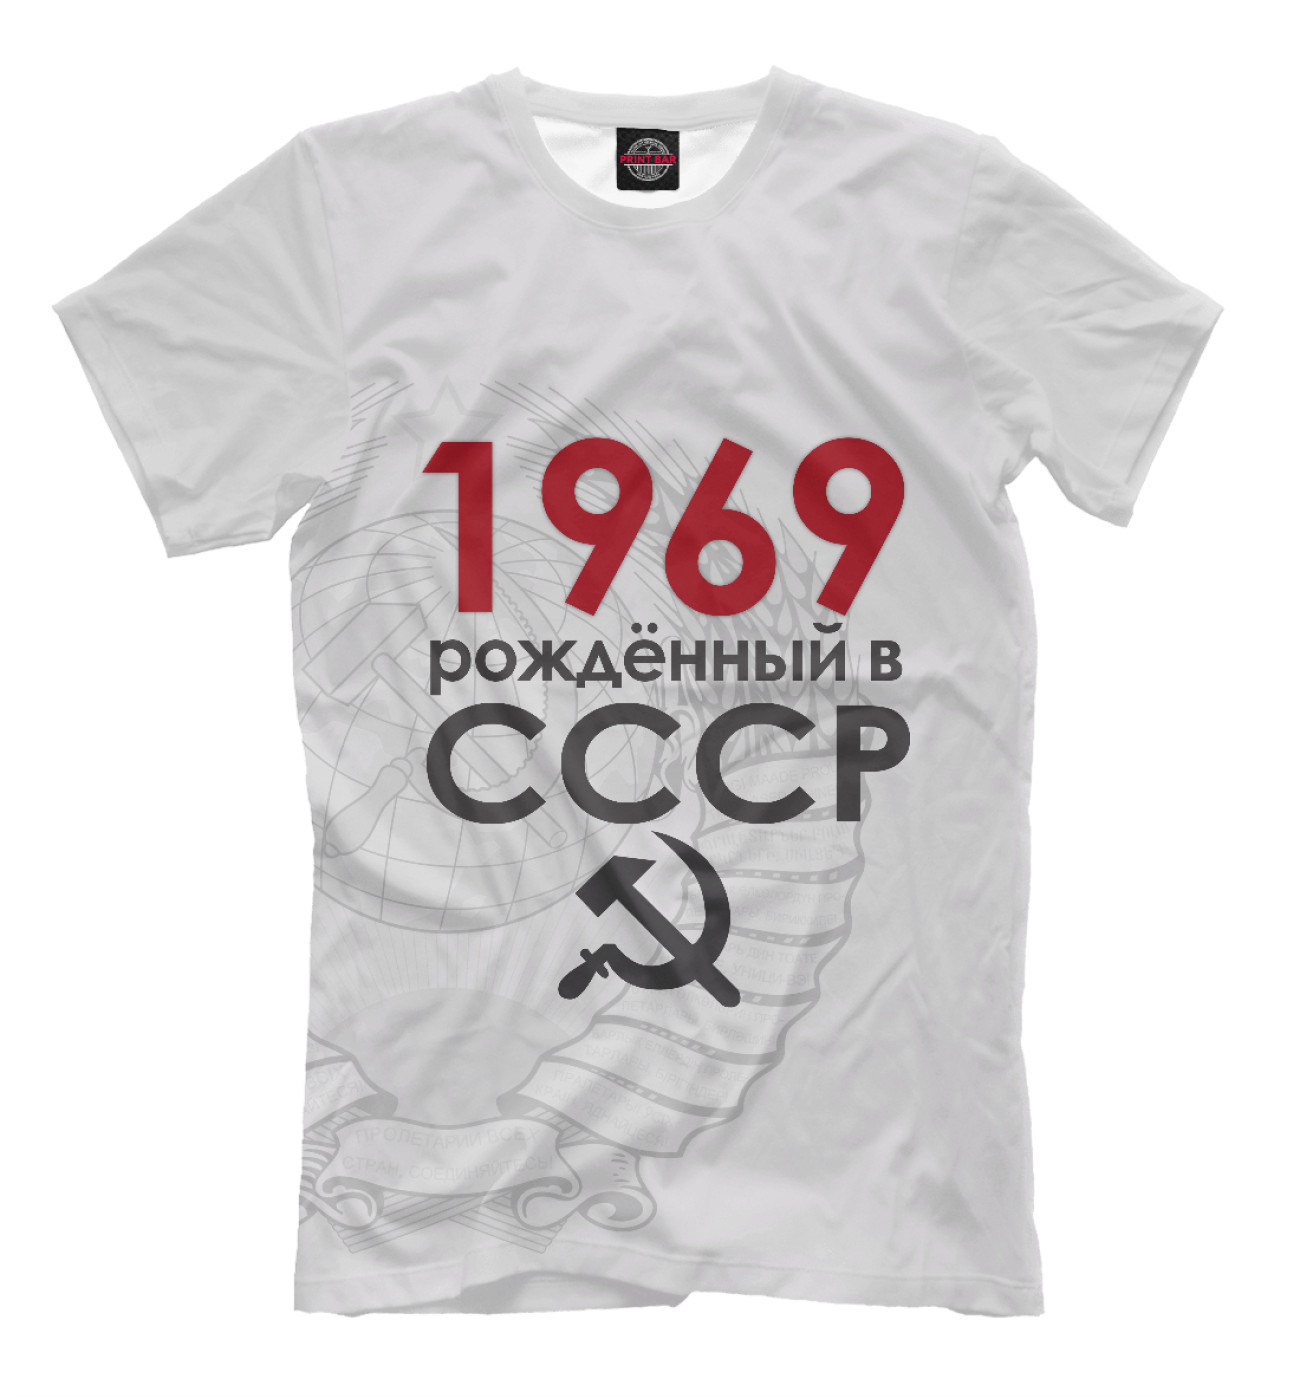 Мужская Футболка Рожденный в СССР 1969, артикул: DHE-189929-fut-2